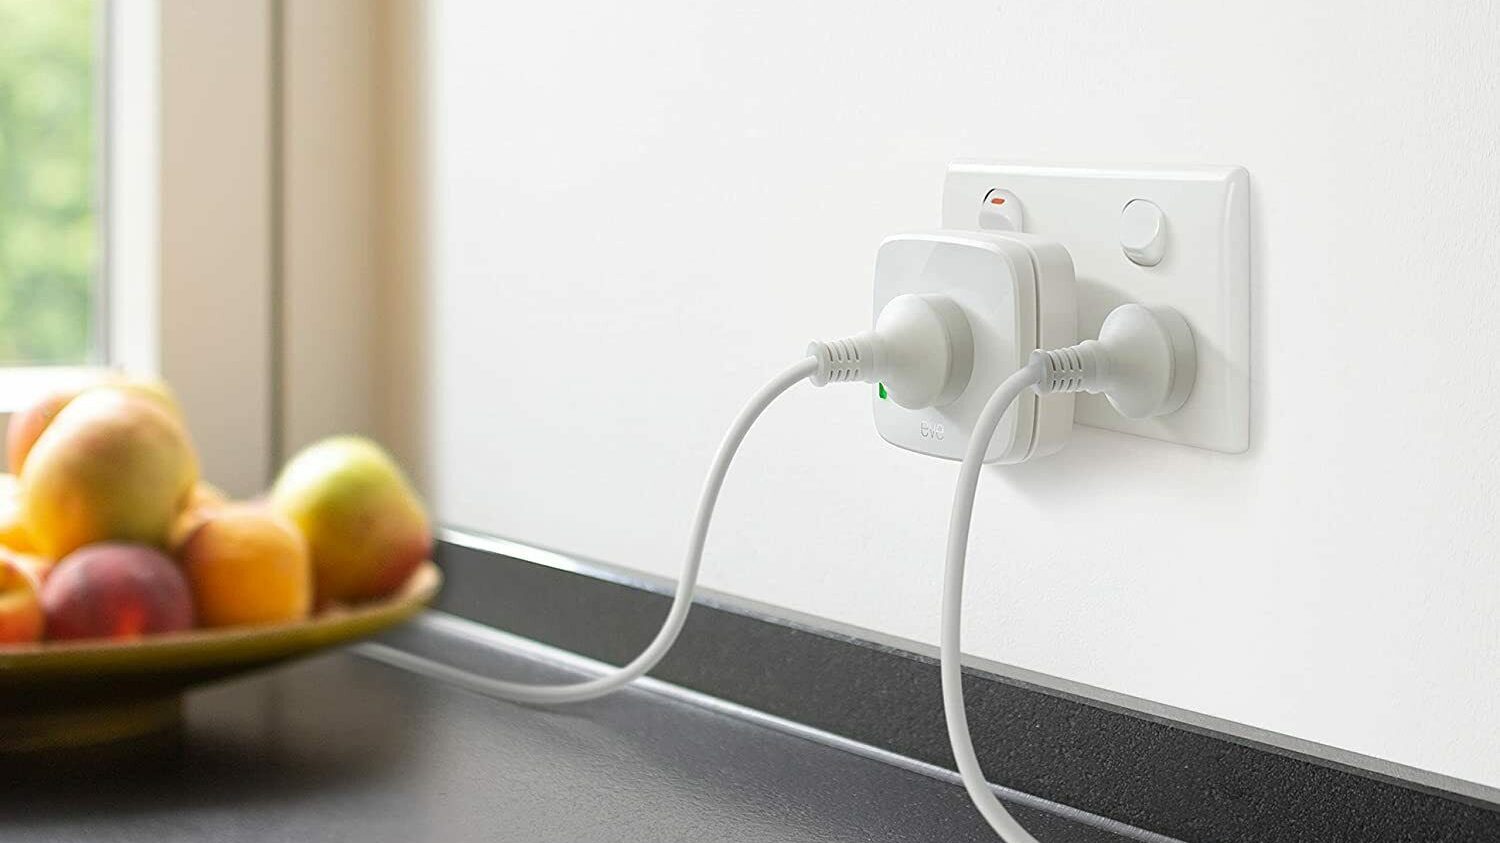 Eve Energy smart plug